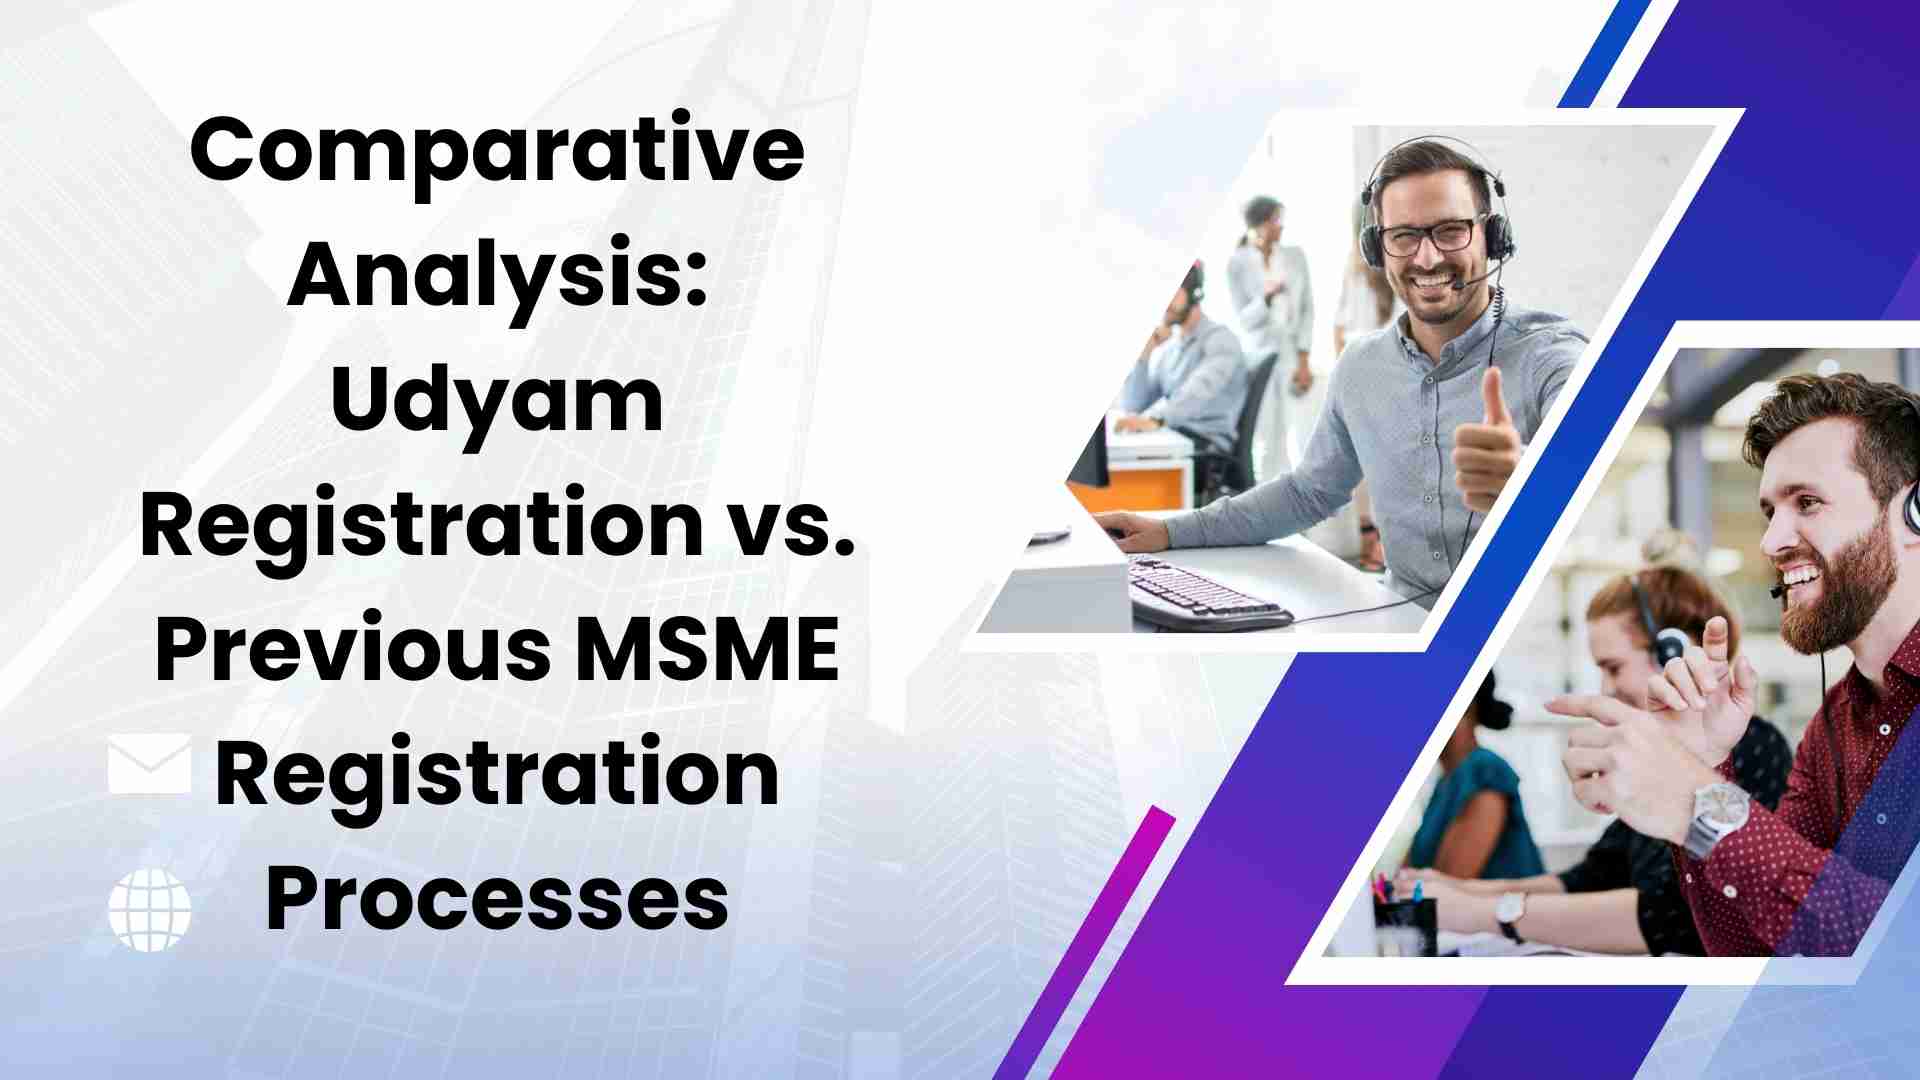 Comparative Analysis Udyam Registration vs. Previous MSME Registration Processes